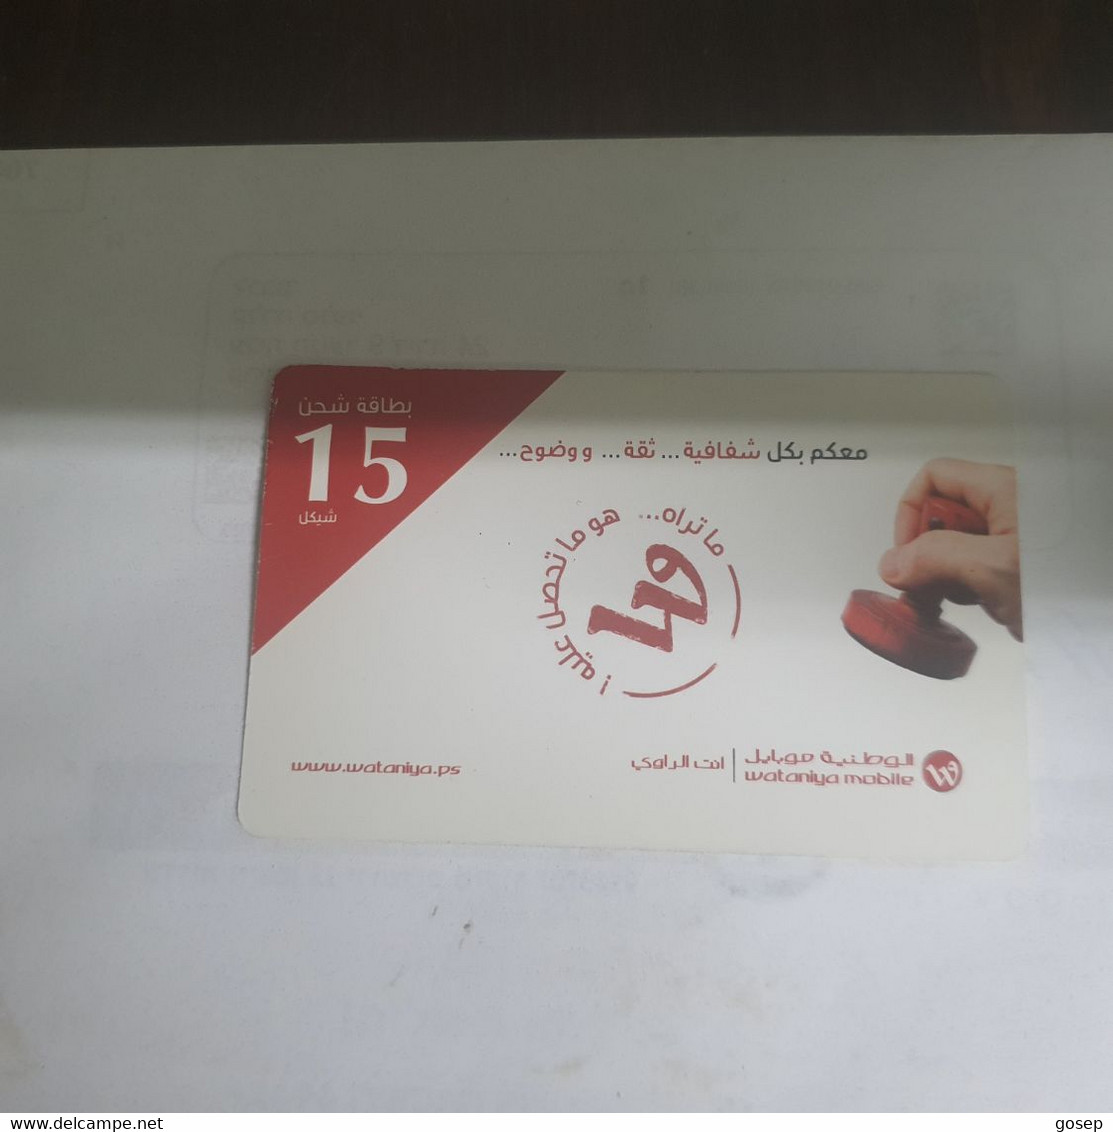 PALESTINE-(PS-WAT-REF-0005A)-Mobile 15-(377)-(3895-4858-8059-2506)-(1/8/2014)used Card+1prepiad Free - Palästina